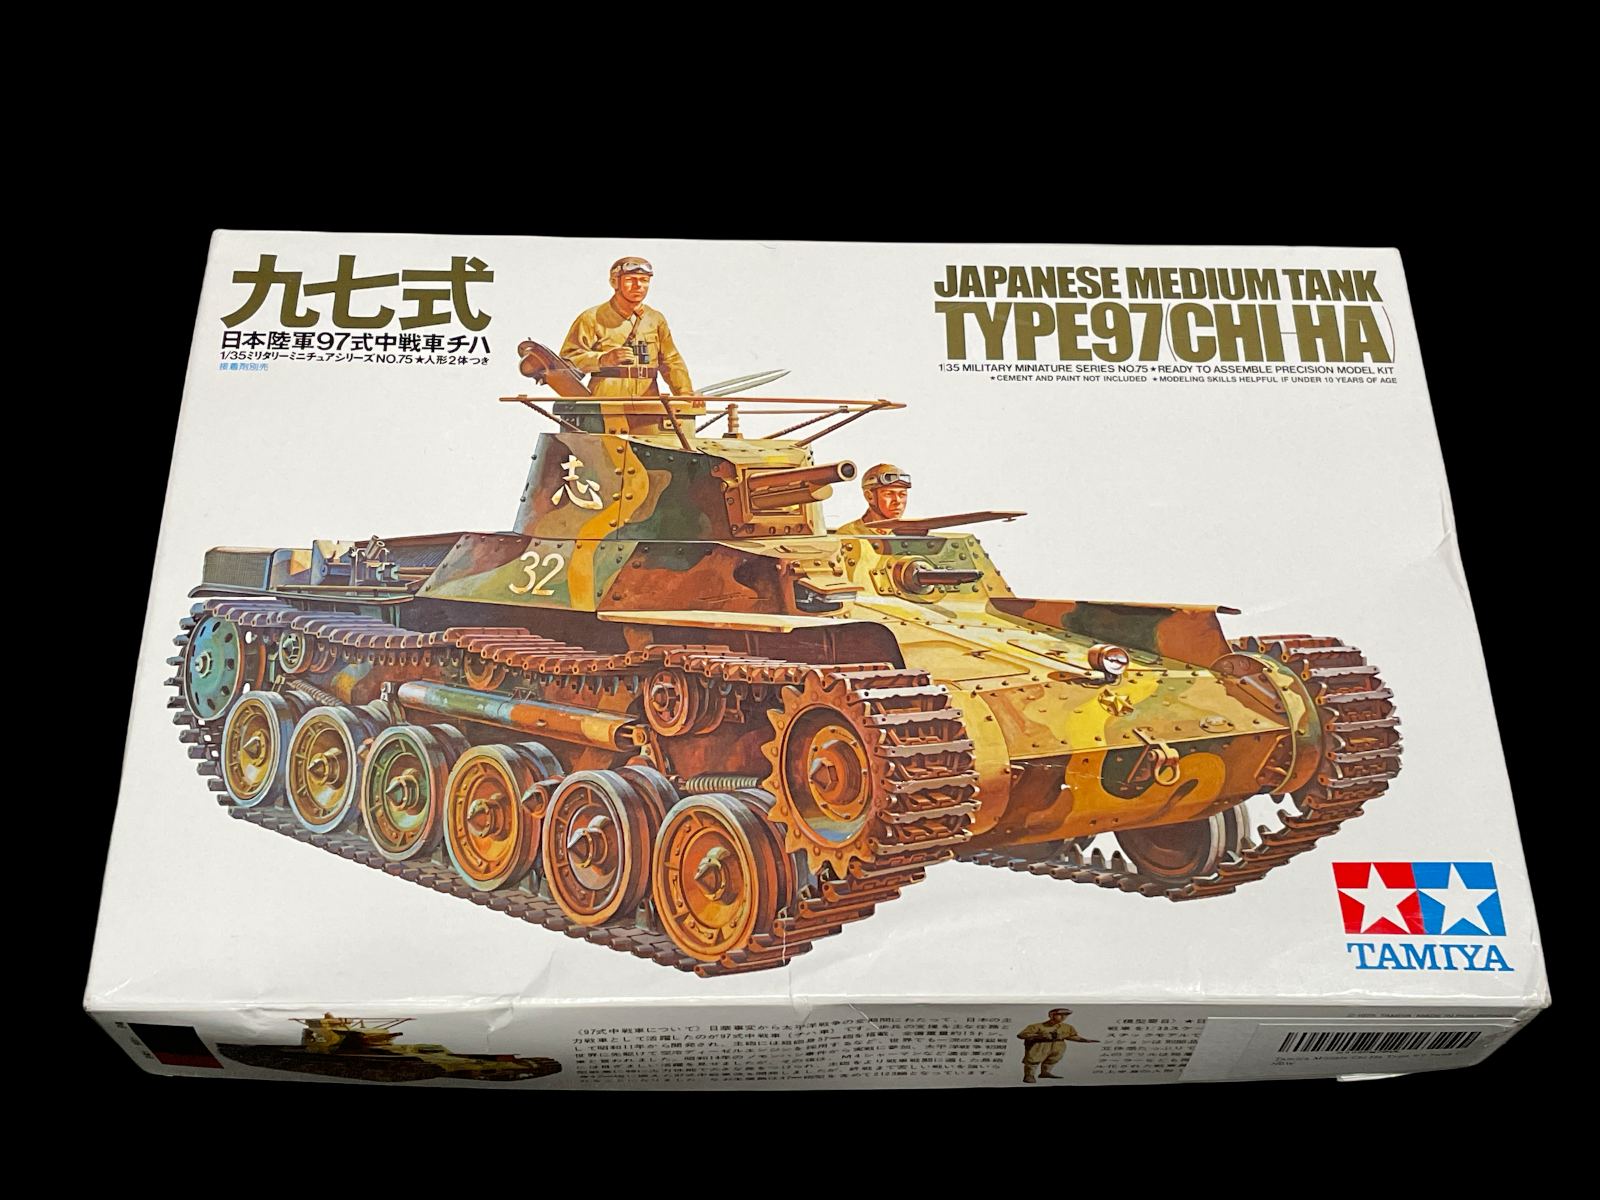 Japanese Medium Tank Type 97 CHI-Ha 1/35 Plastic Models Tamiya